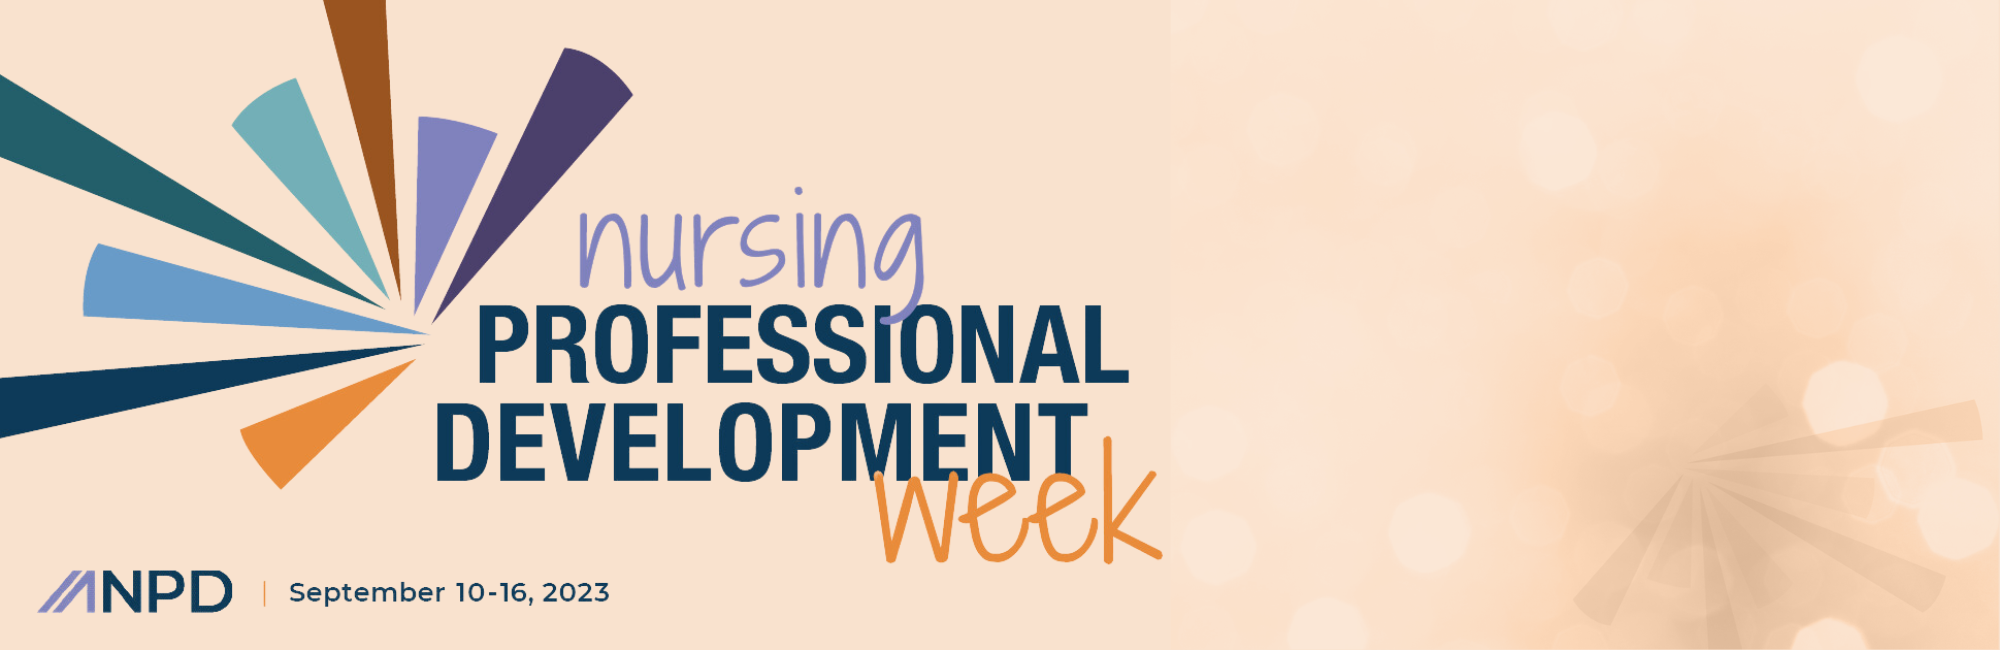 Nursing Professional Development Week